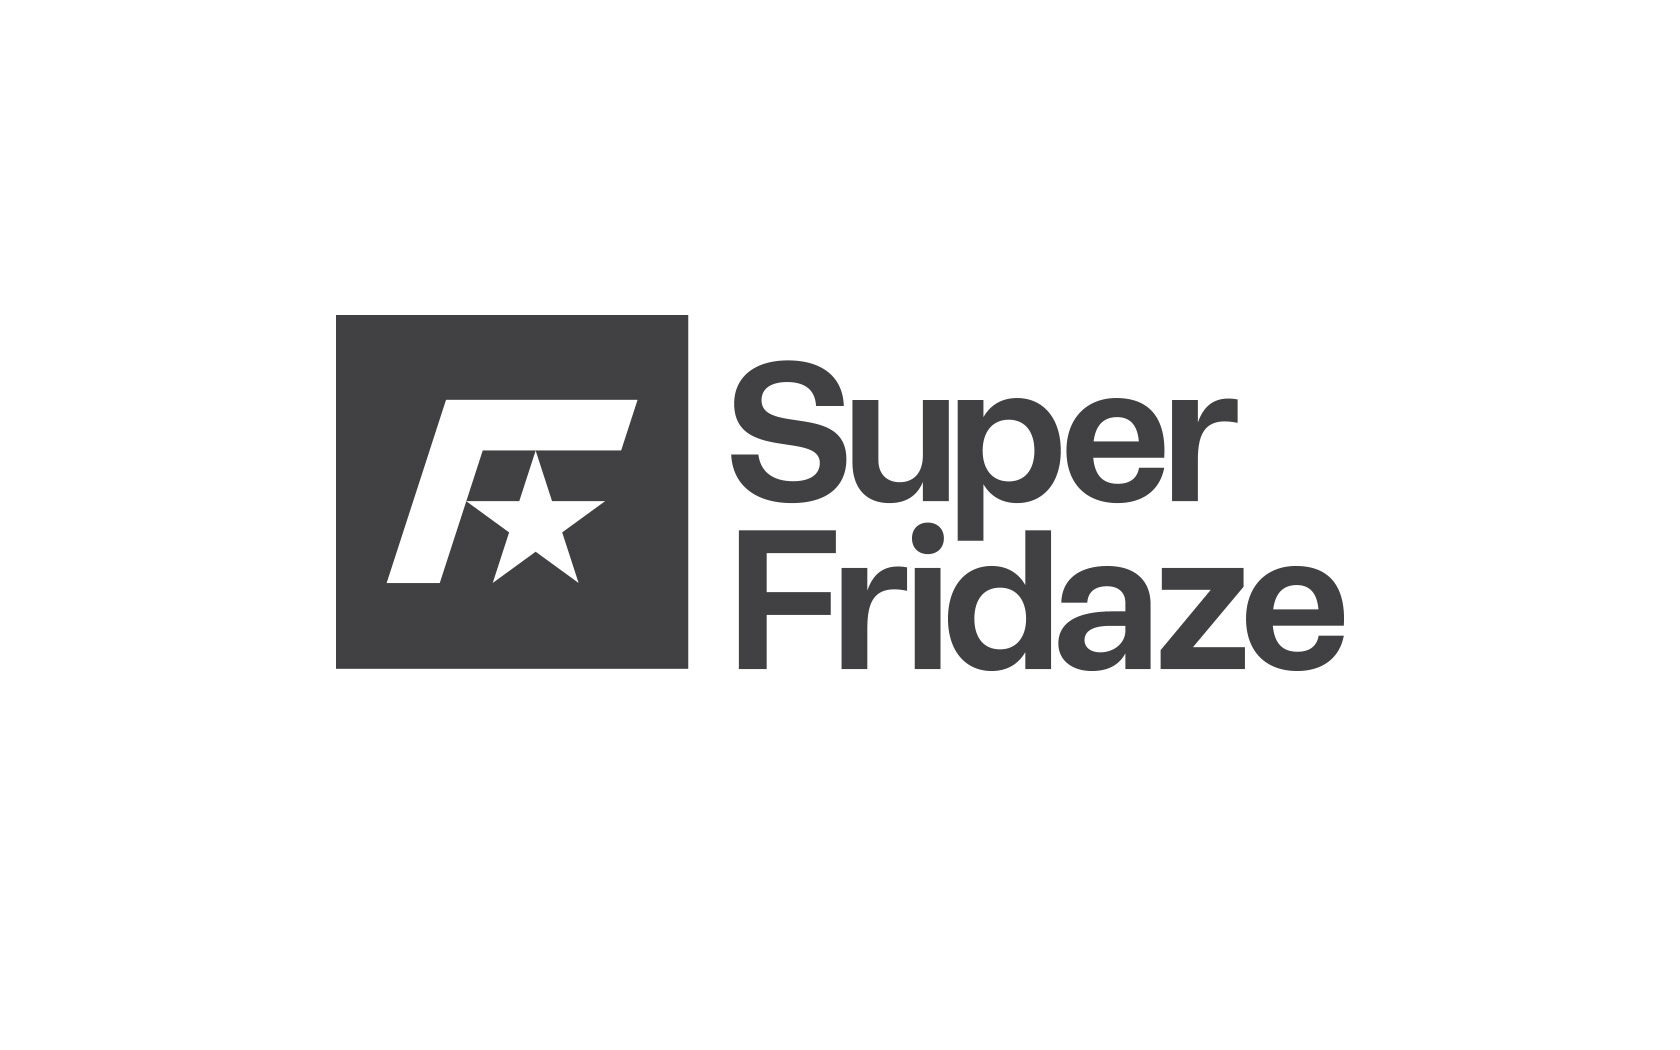 Super Fridaze. Brand logo in black colour